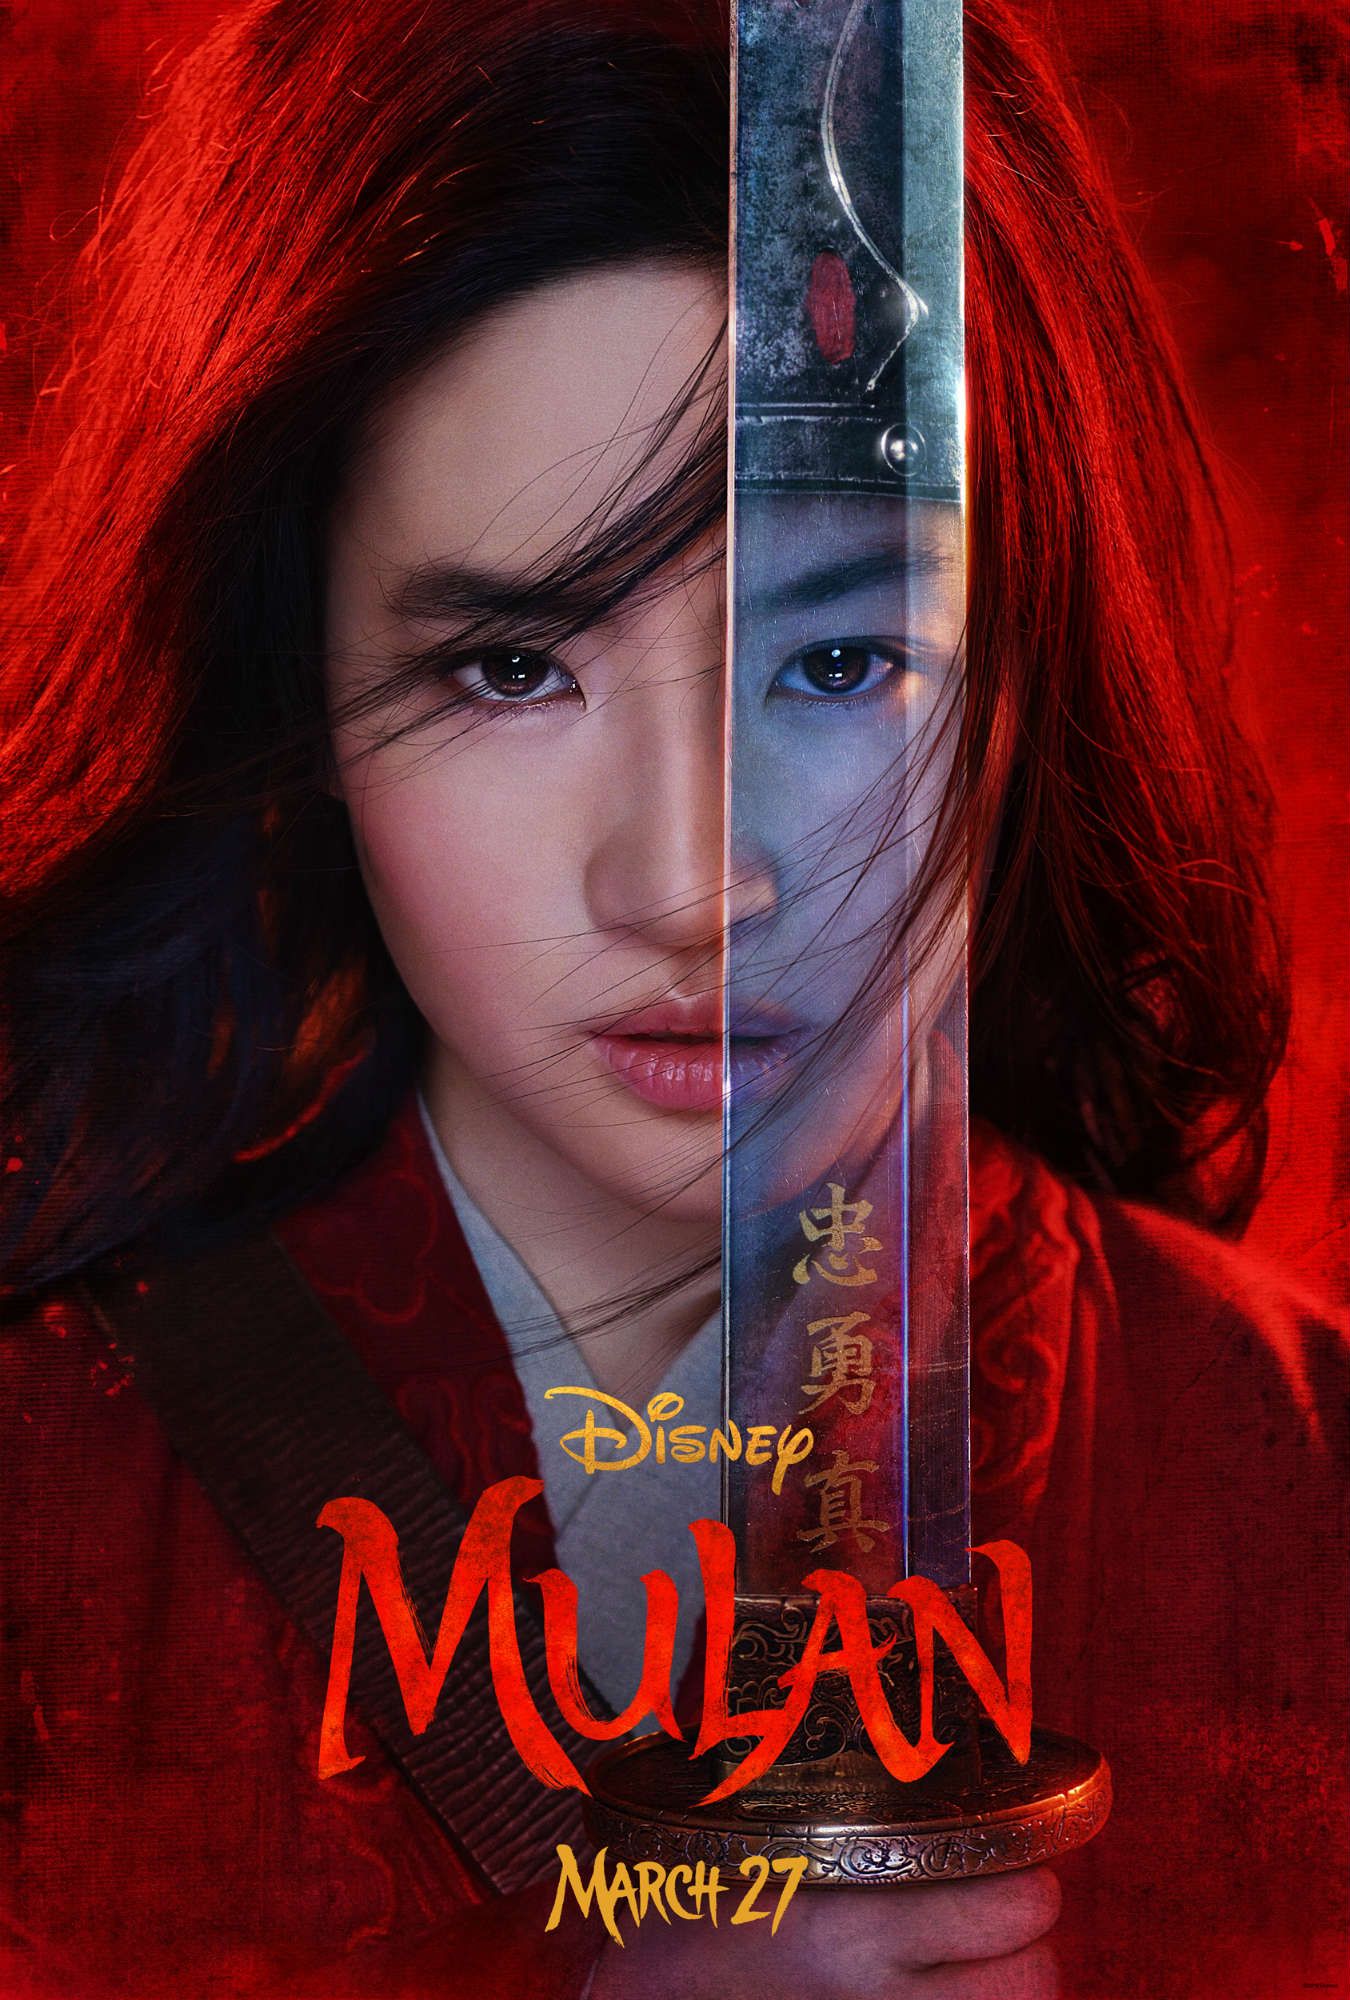 Mulan Teaser Trailer Reveals First Look At Disney’s Live-Action Remake